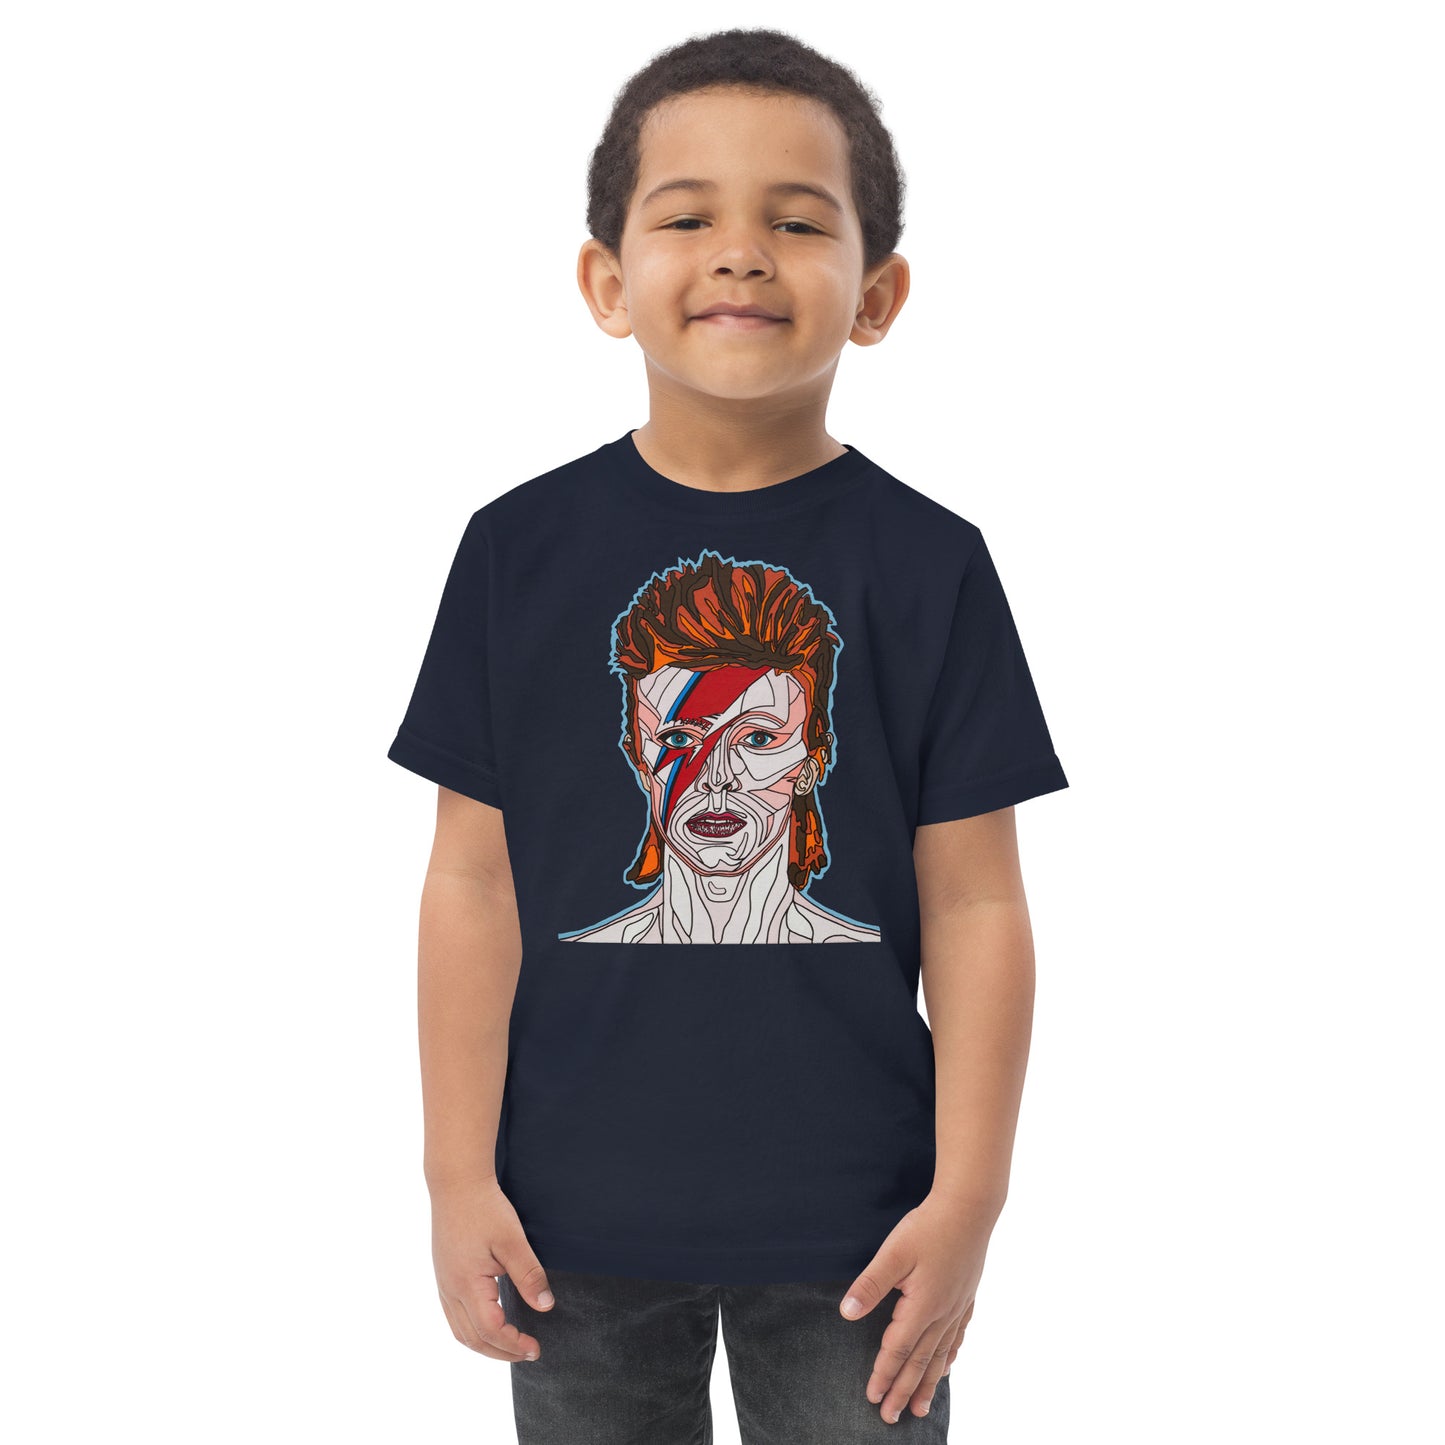 Starman - Toddler jersey t-shirt